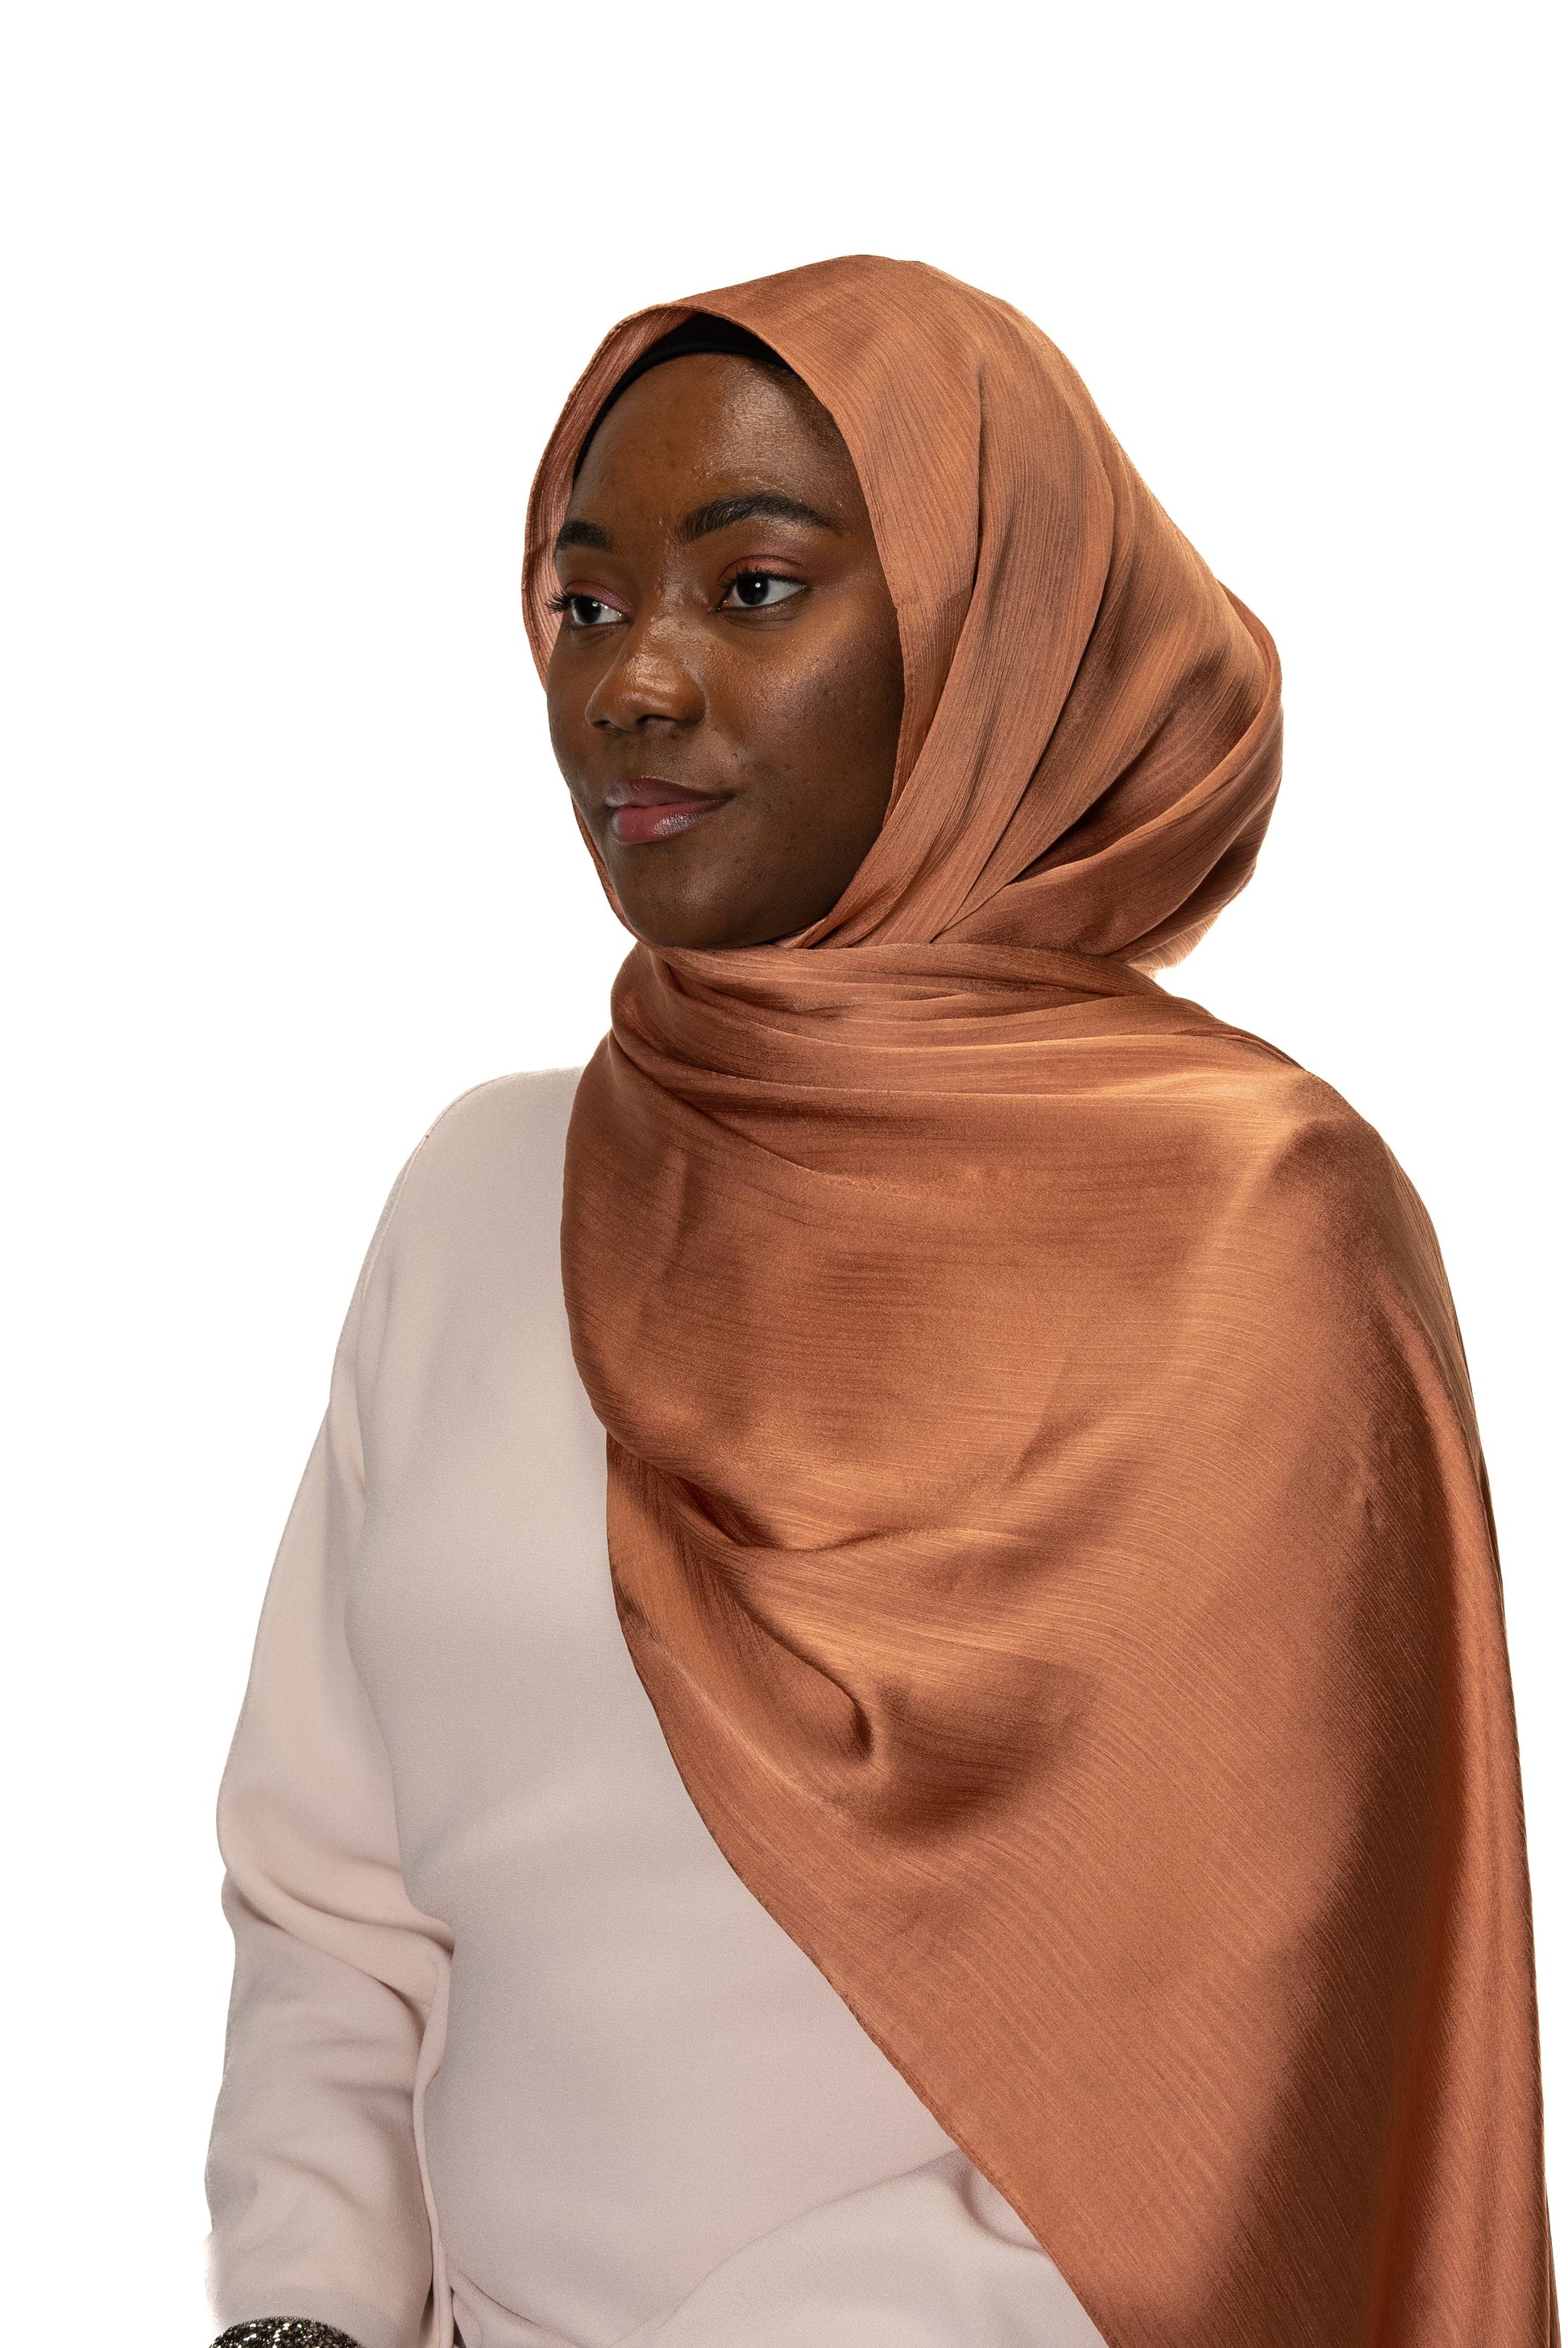 Jolie Nisa Hijab Caramel Jolie Nisa None Slip Premium Satin Crinkle Hijab Scarf Your Style with Jolie Nisa None Slip Premium Satin Crinkle Hijab Scarf